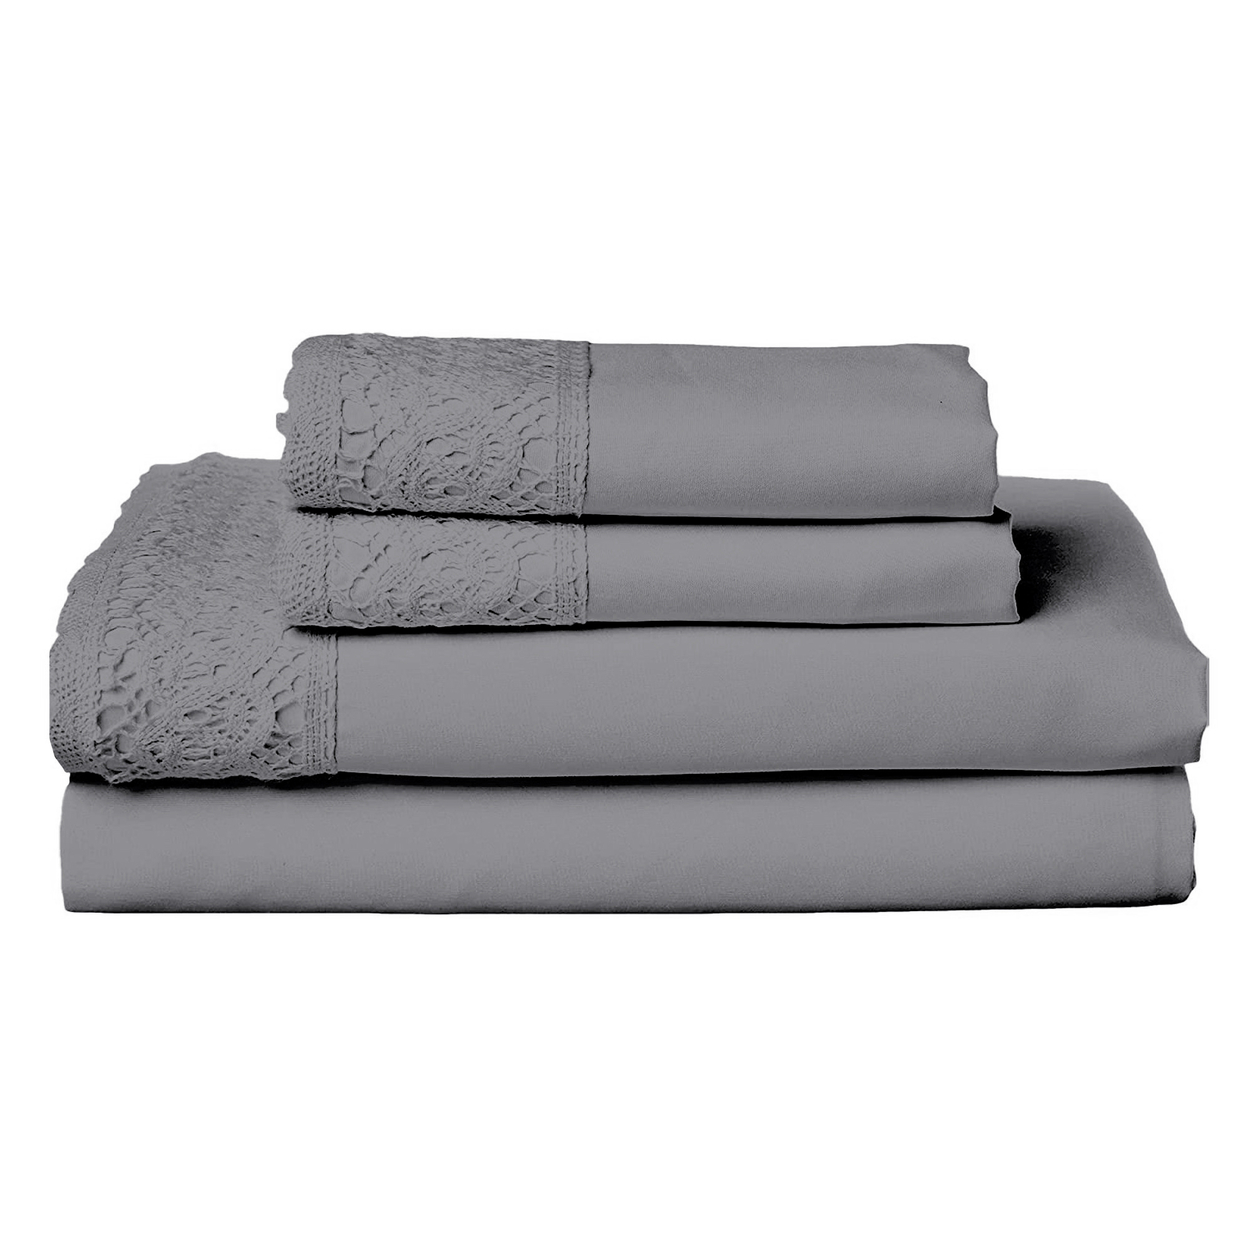 Edra 4 Piece Microfiber King Size Bed Sheet Set With Crochet Lace, Gray- Saltoro Sherpi